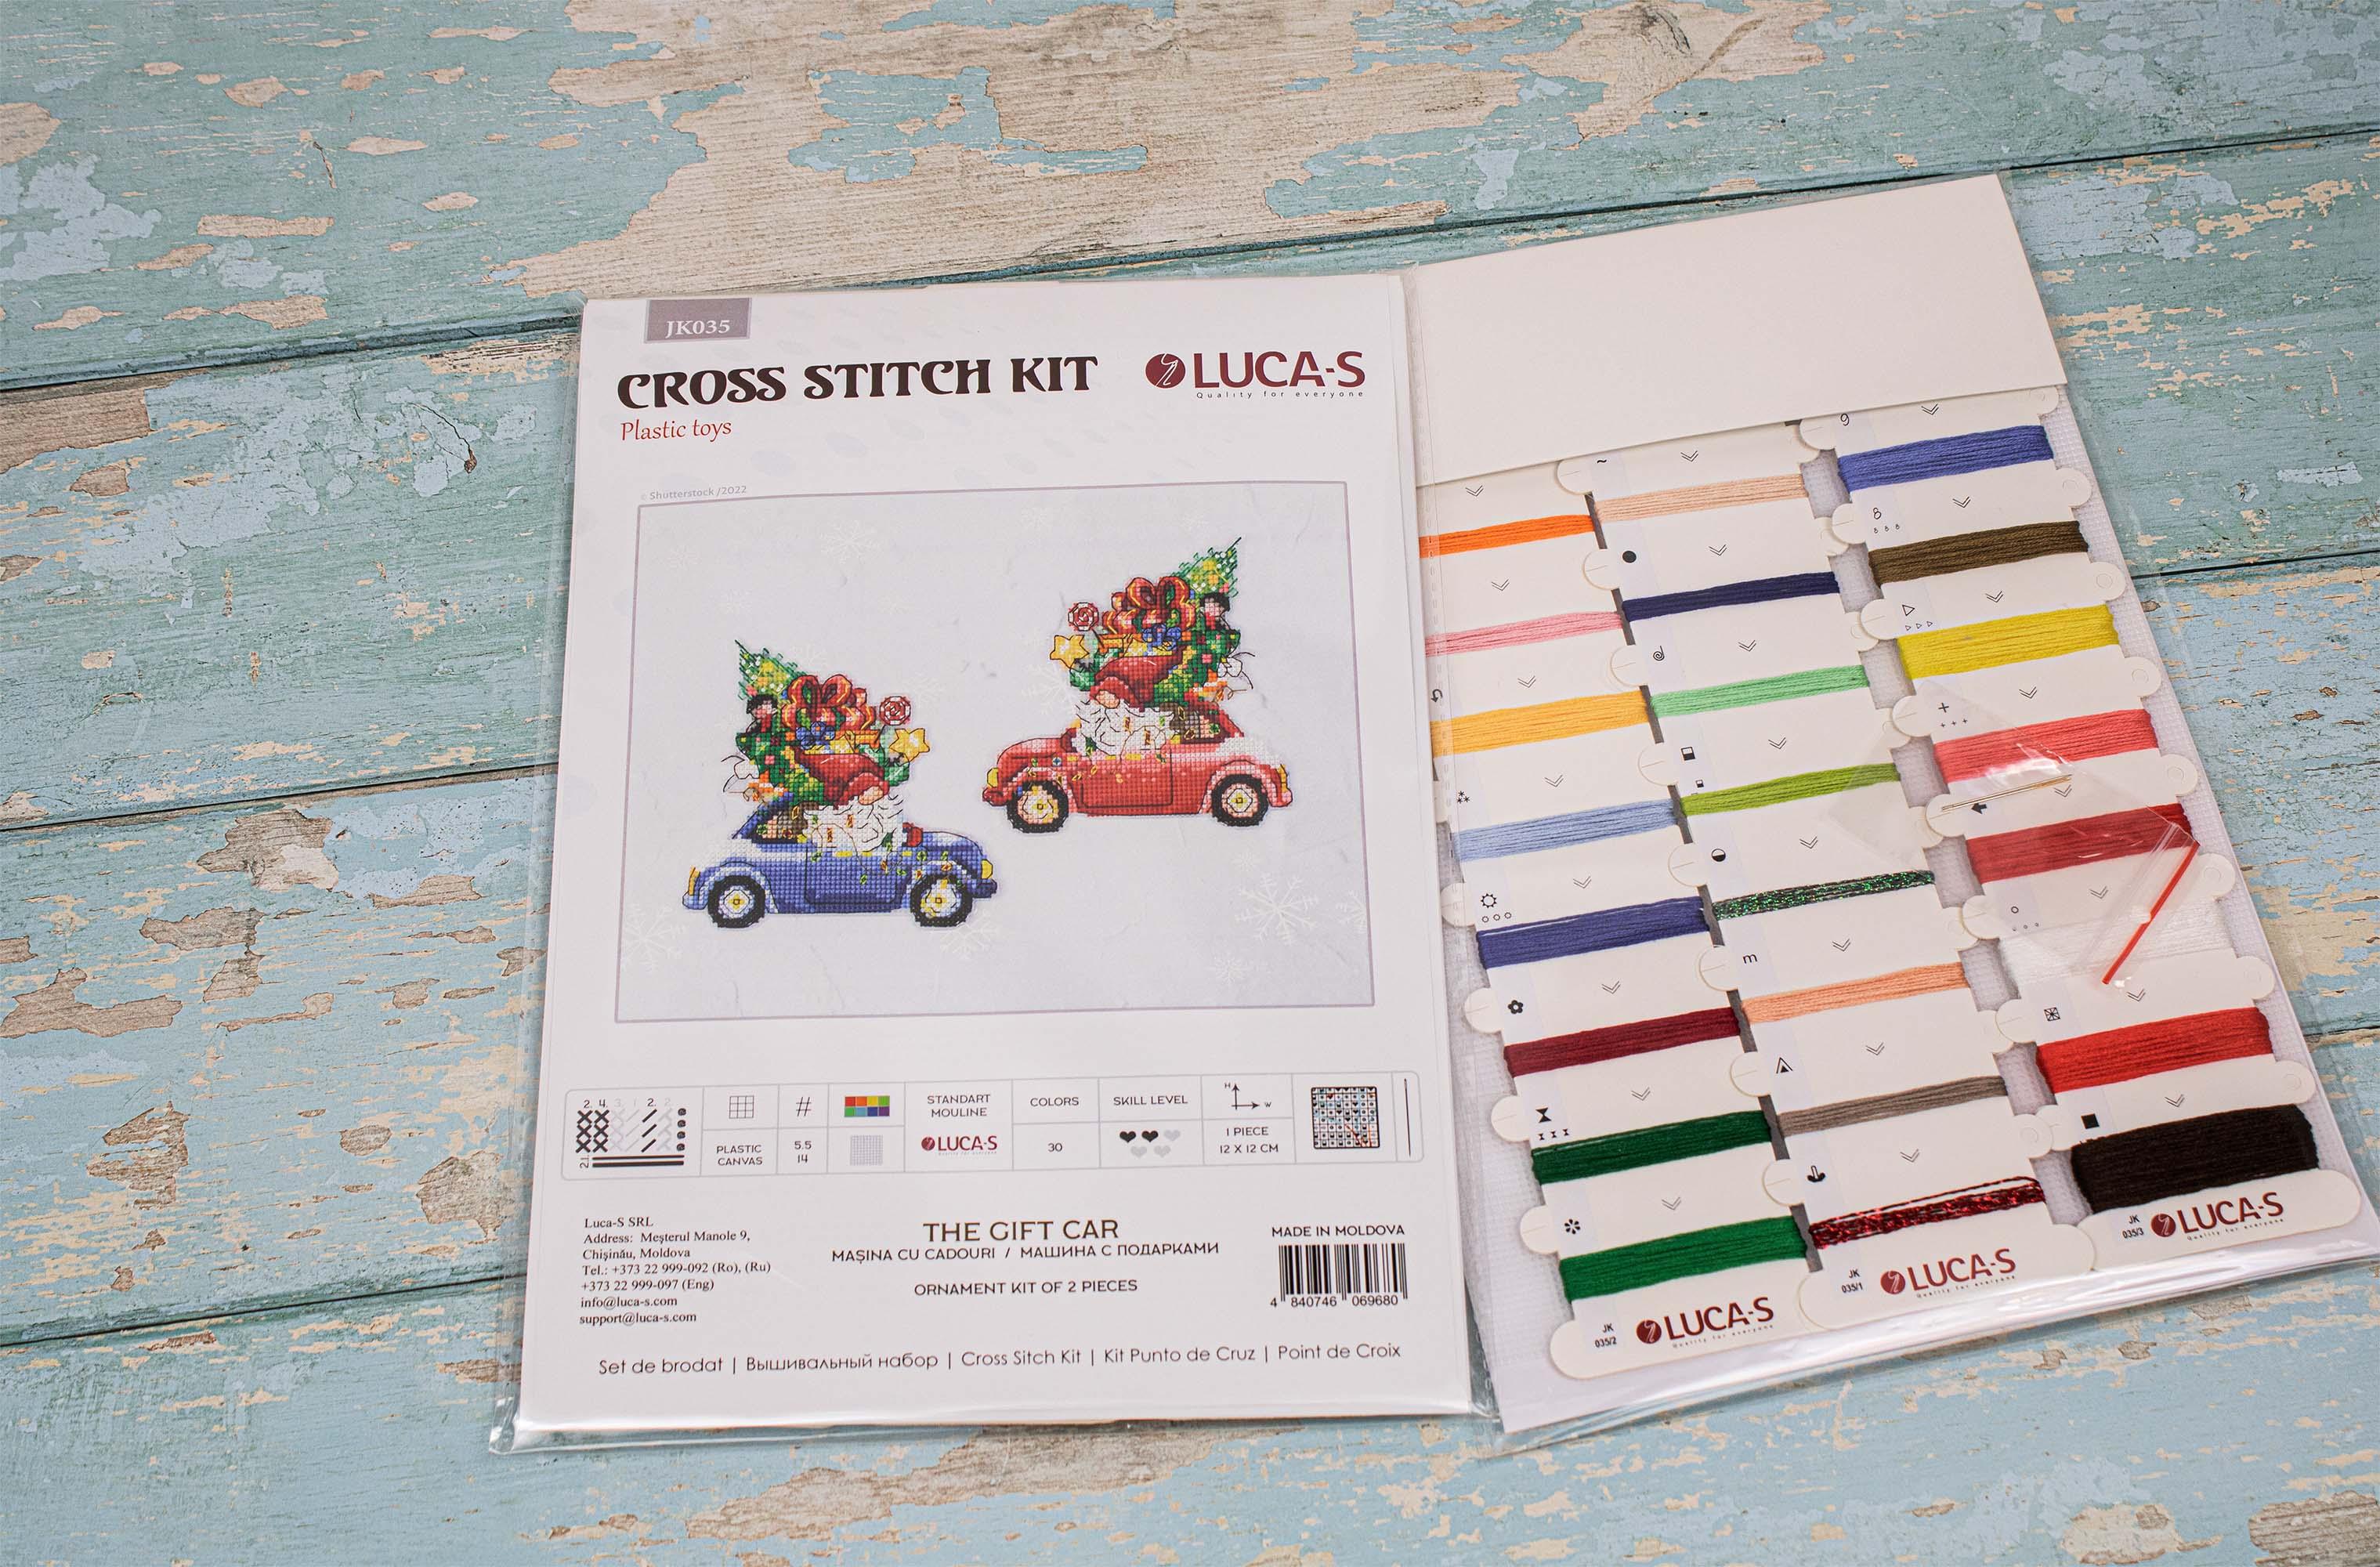 Toys Cross Stitch Kit Luca-S - The Gift Car, JK035 - Luca-S Cross Stitch Toys